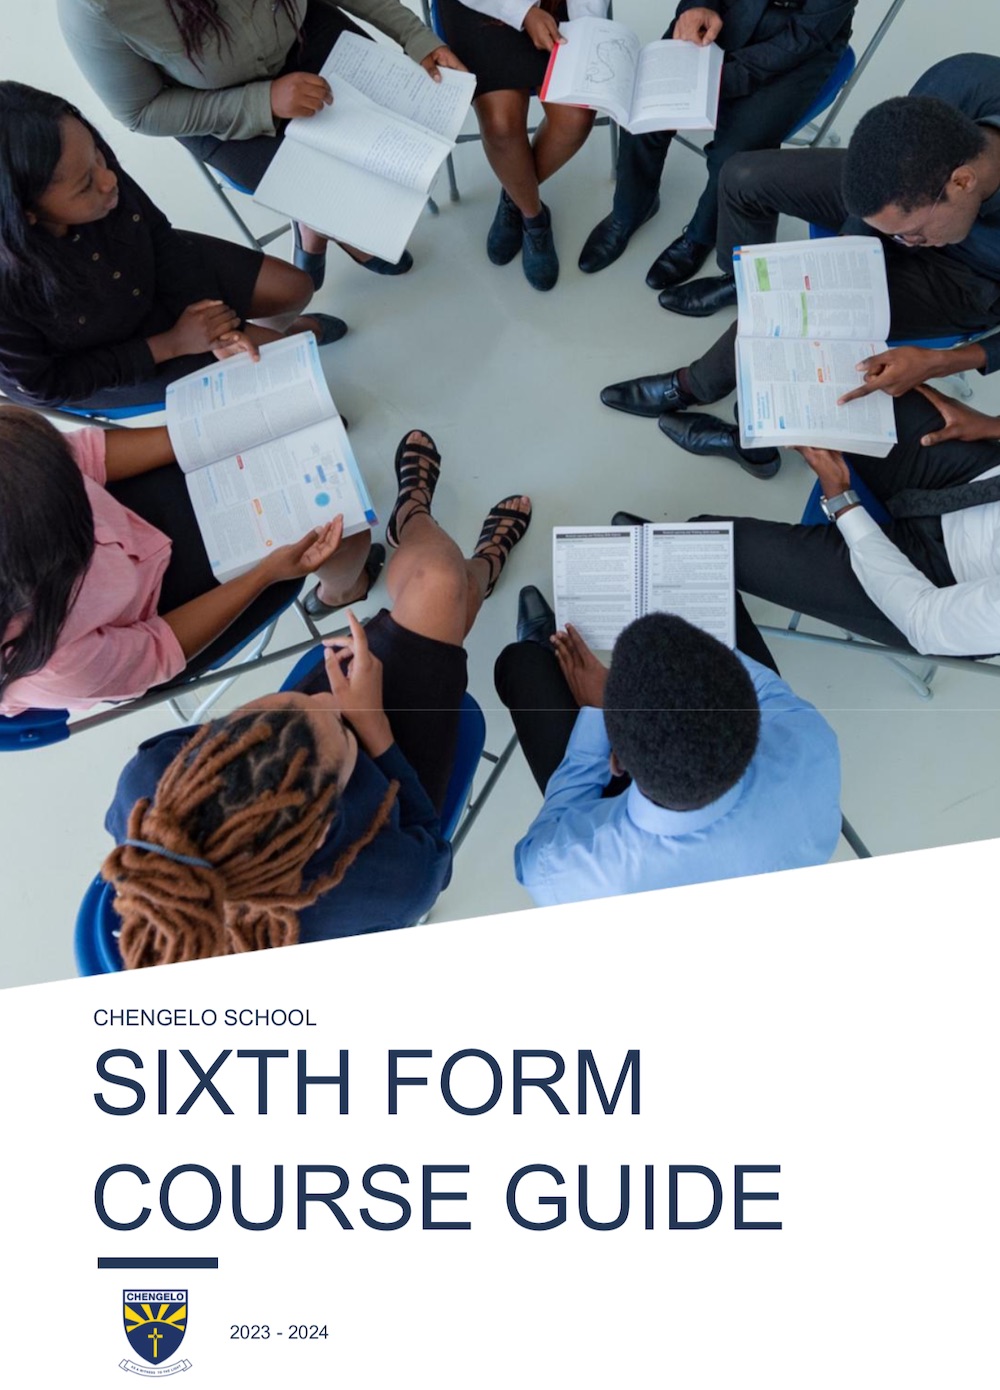 Chengelo School Sixth Form Course Guide